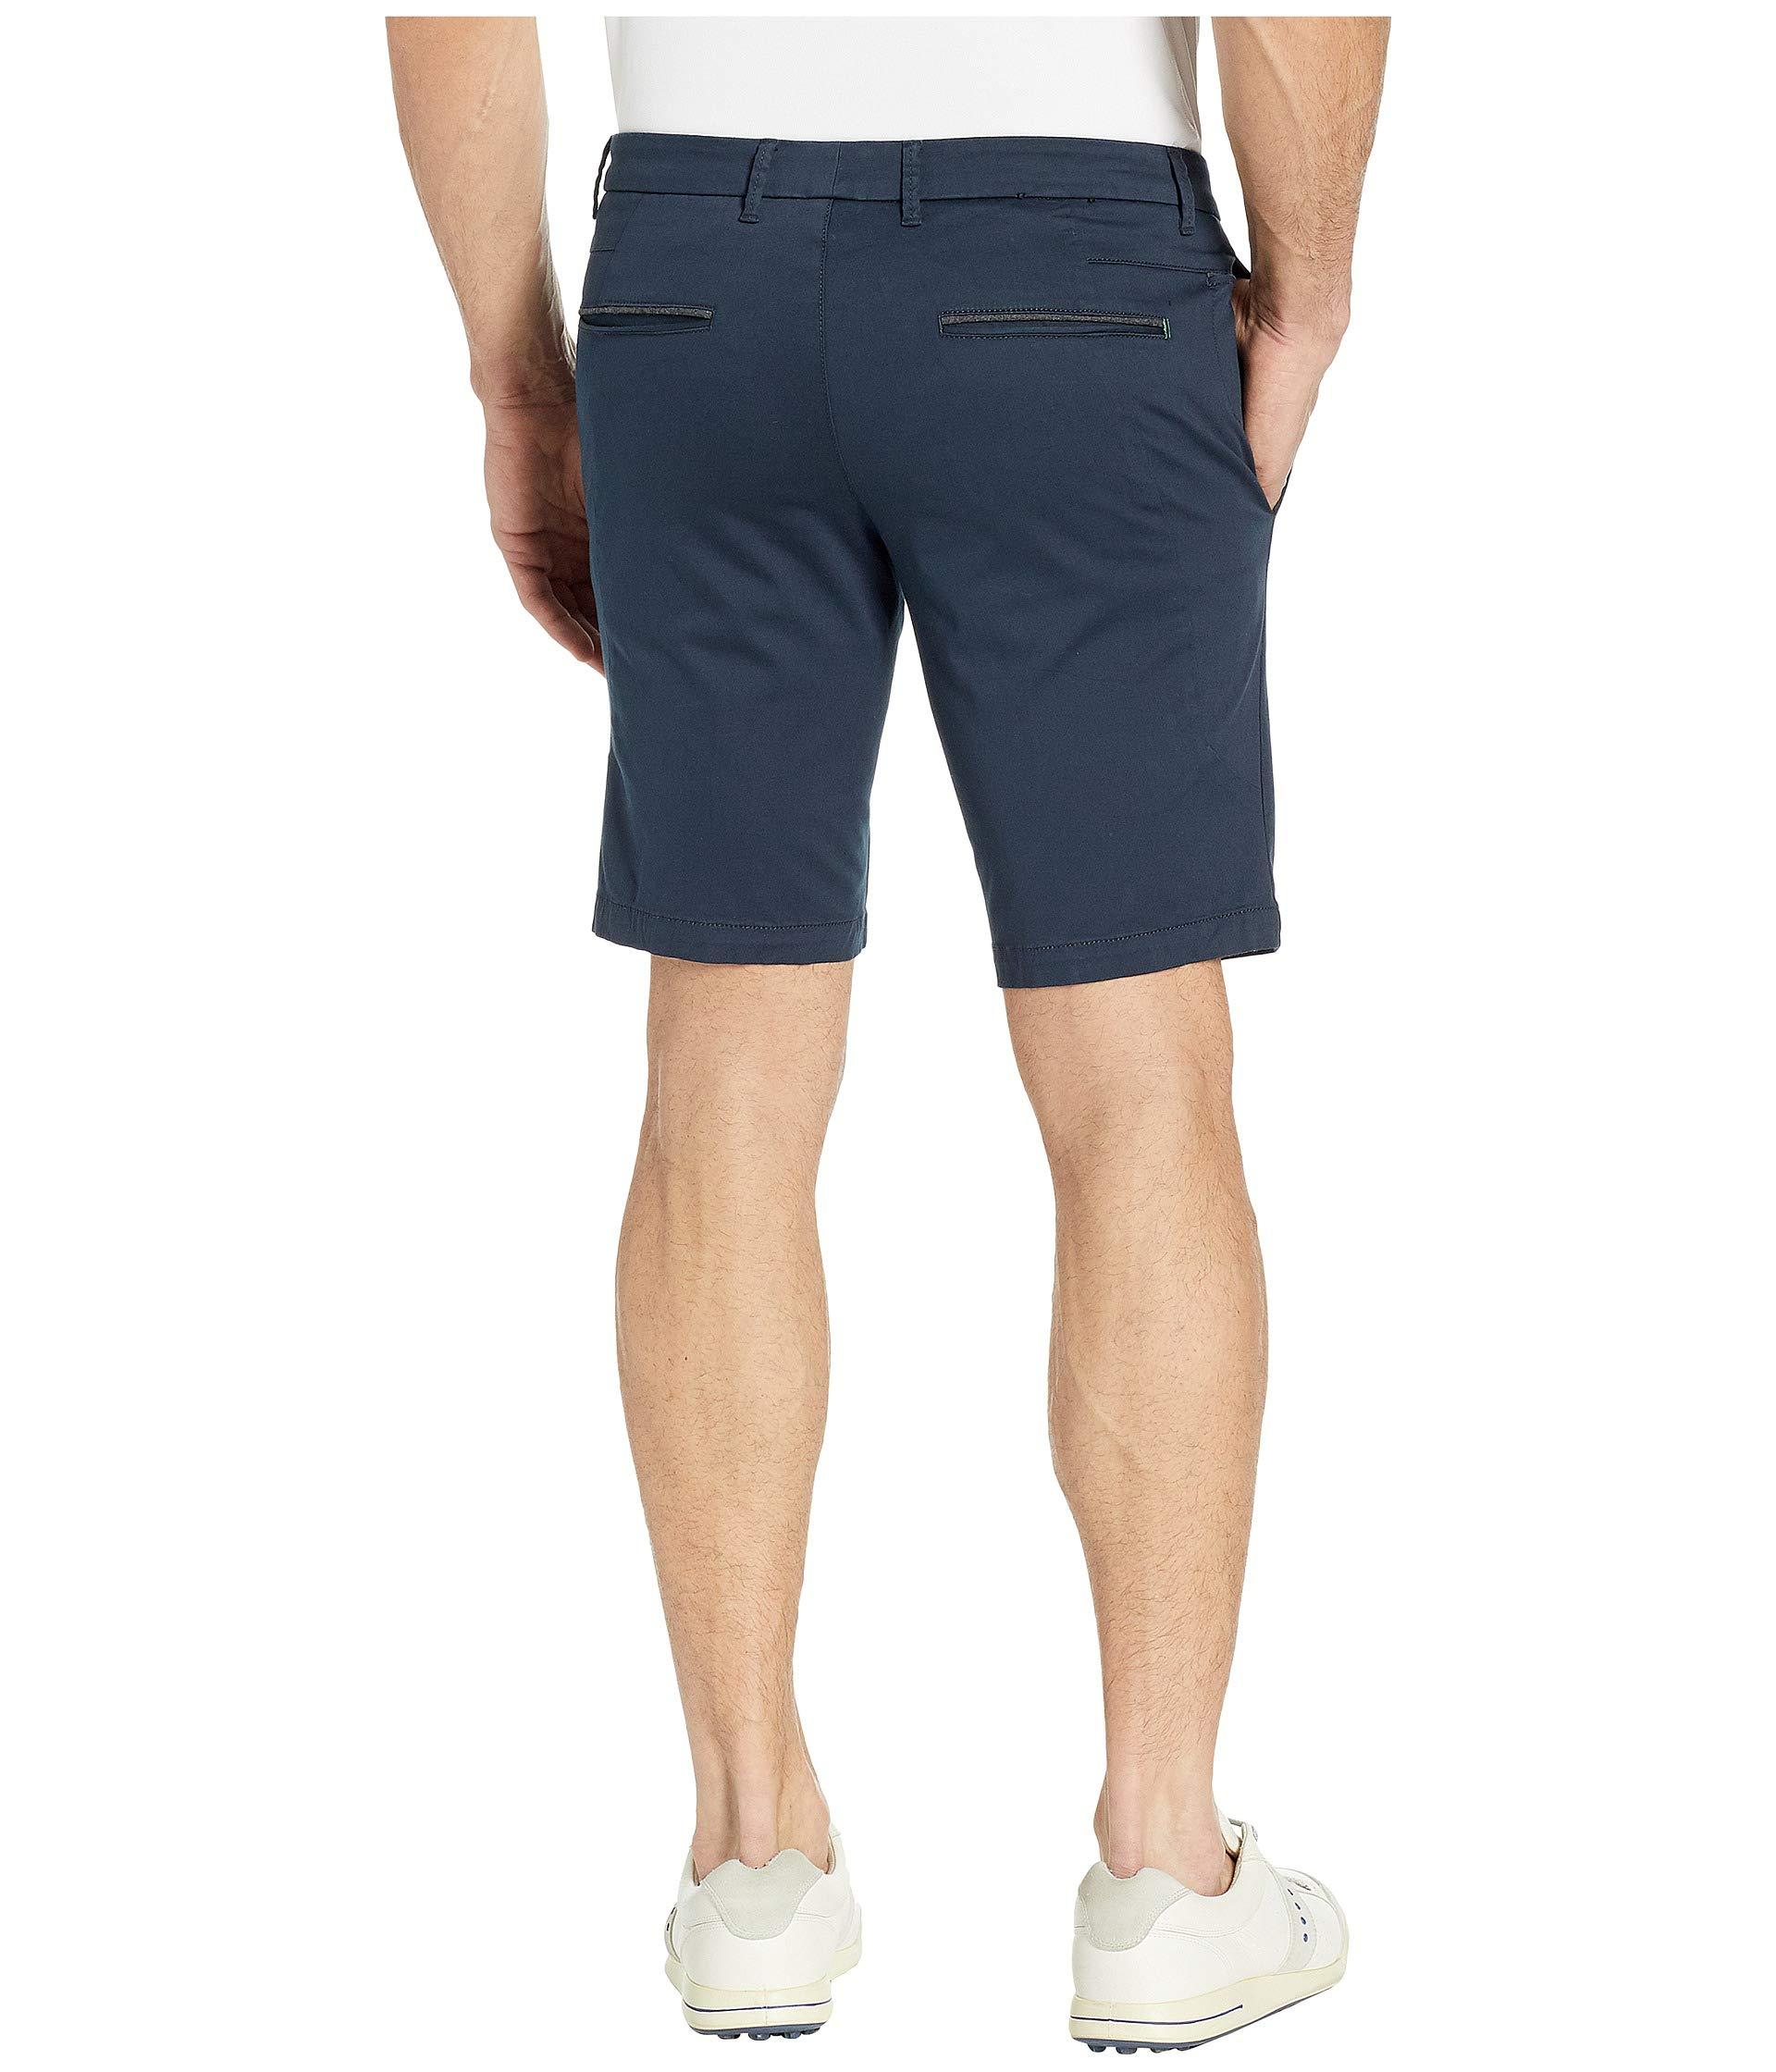 BOSS Satin Slim Fit Golf Shorts in Navy (Blue) for Men - Lyst